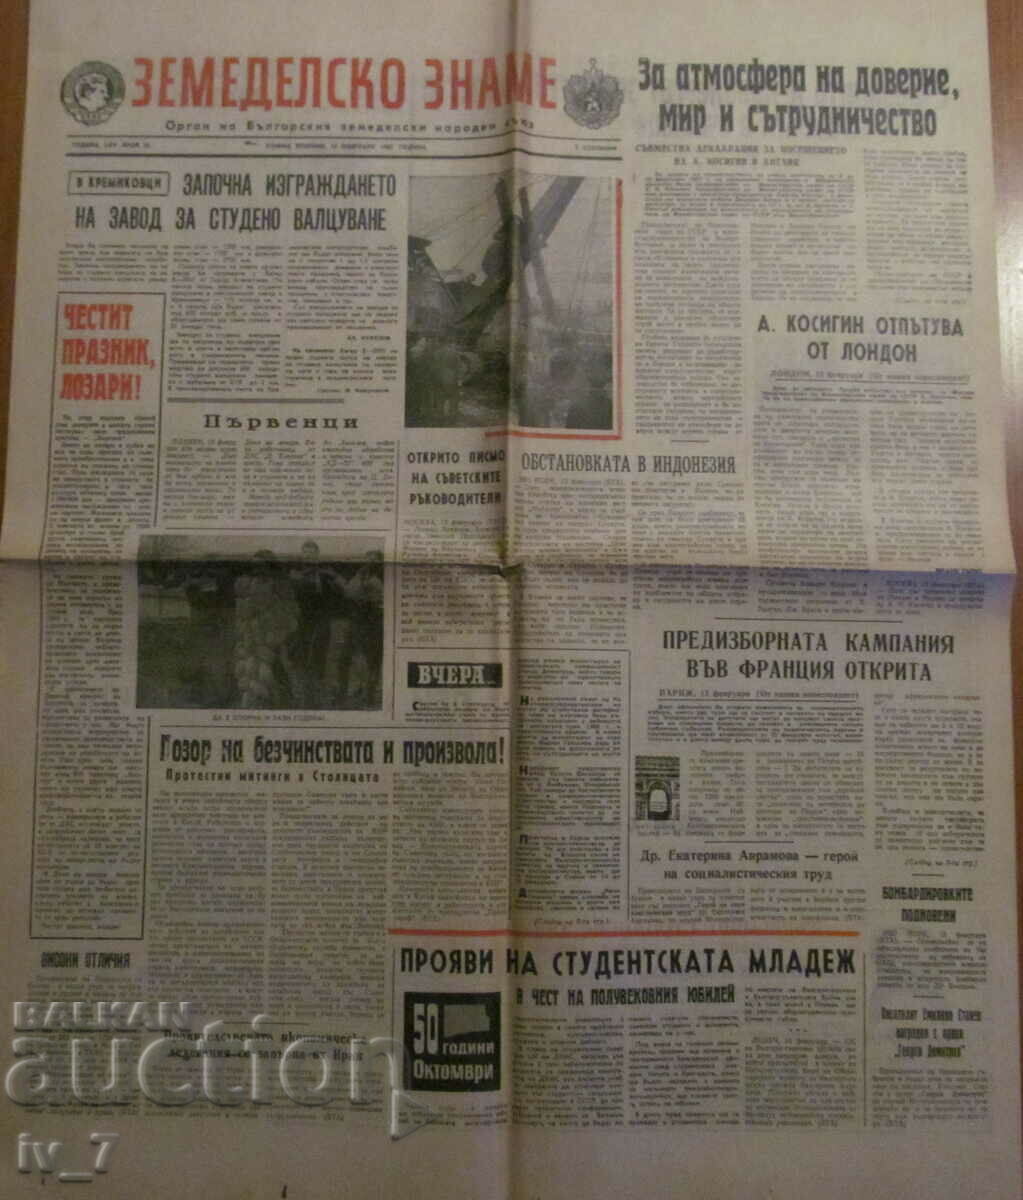 Newspaper "AGRICULTURAL FLAG" - February 14, 1967